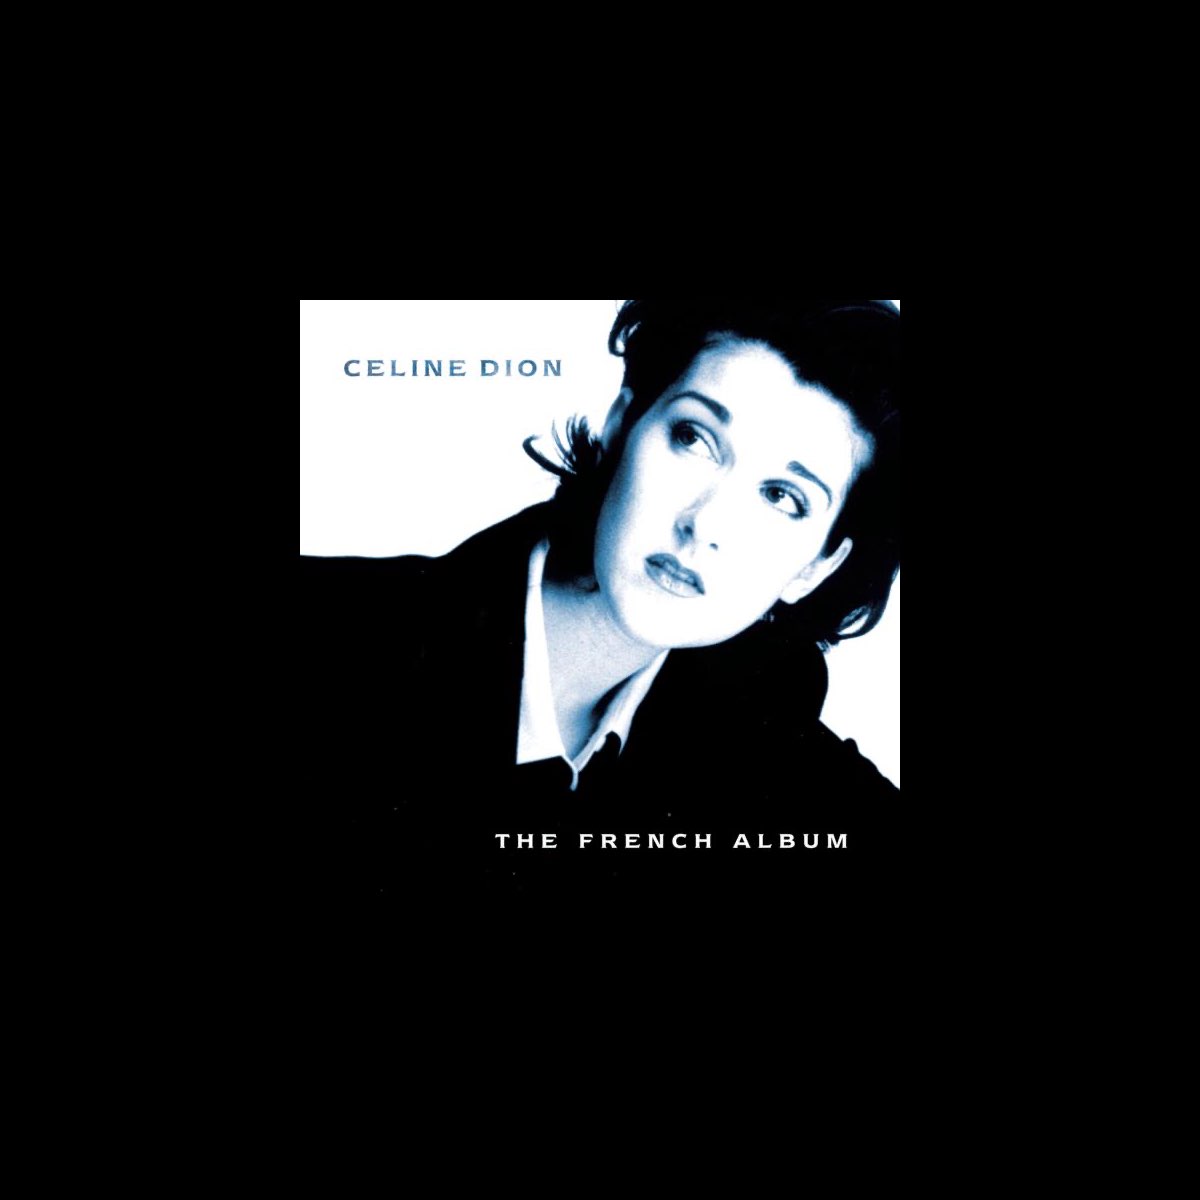 The French Album - Album by Céline Dion - Apple Music